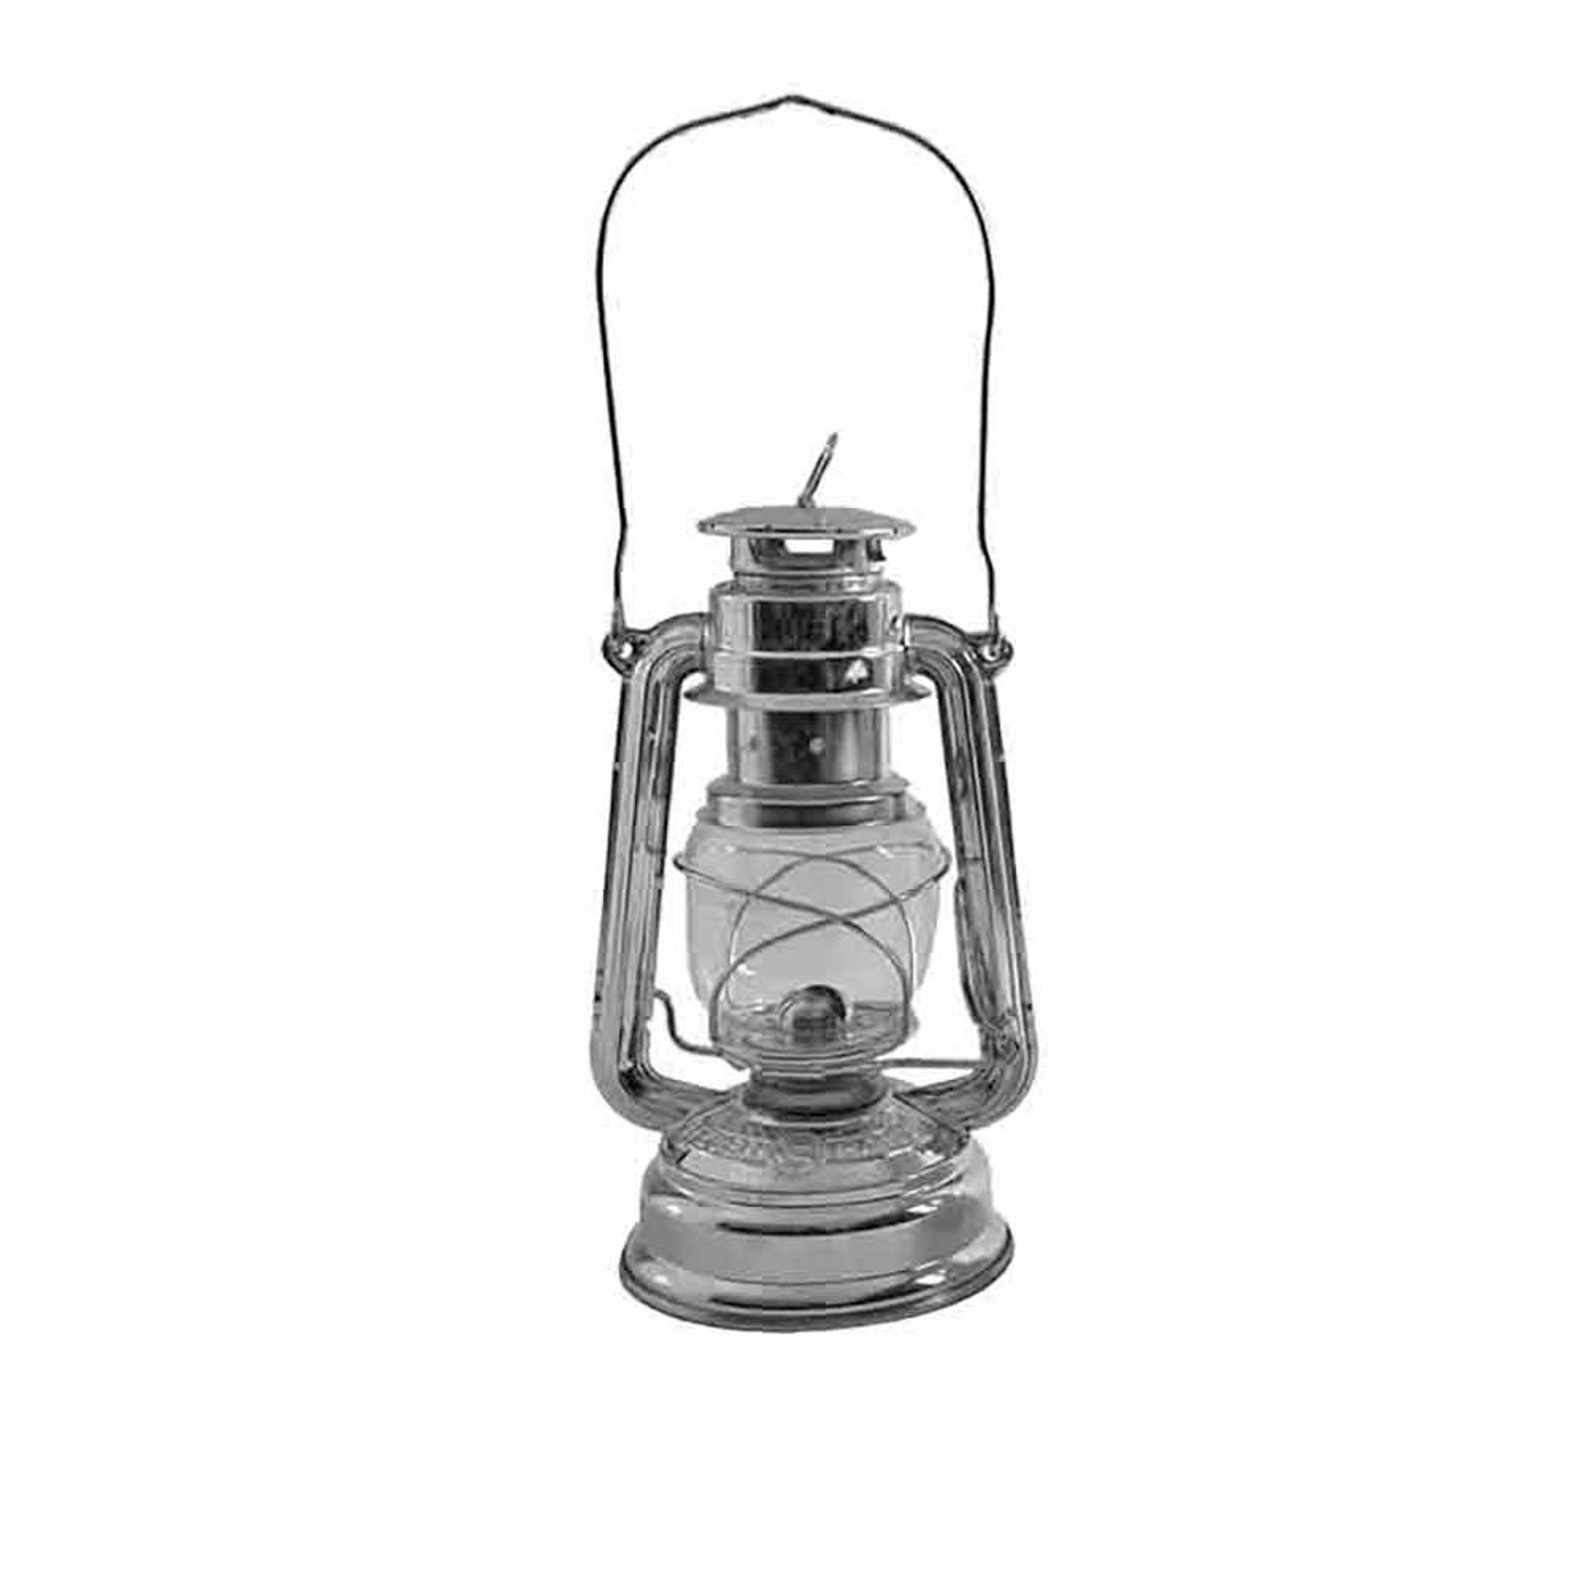 Hurricane Kerosene Lantern / Lamp for Bushcraft and Camping - Etsy